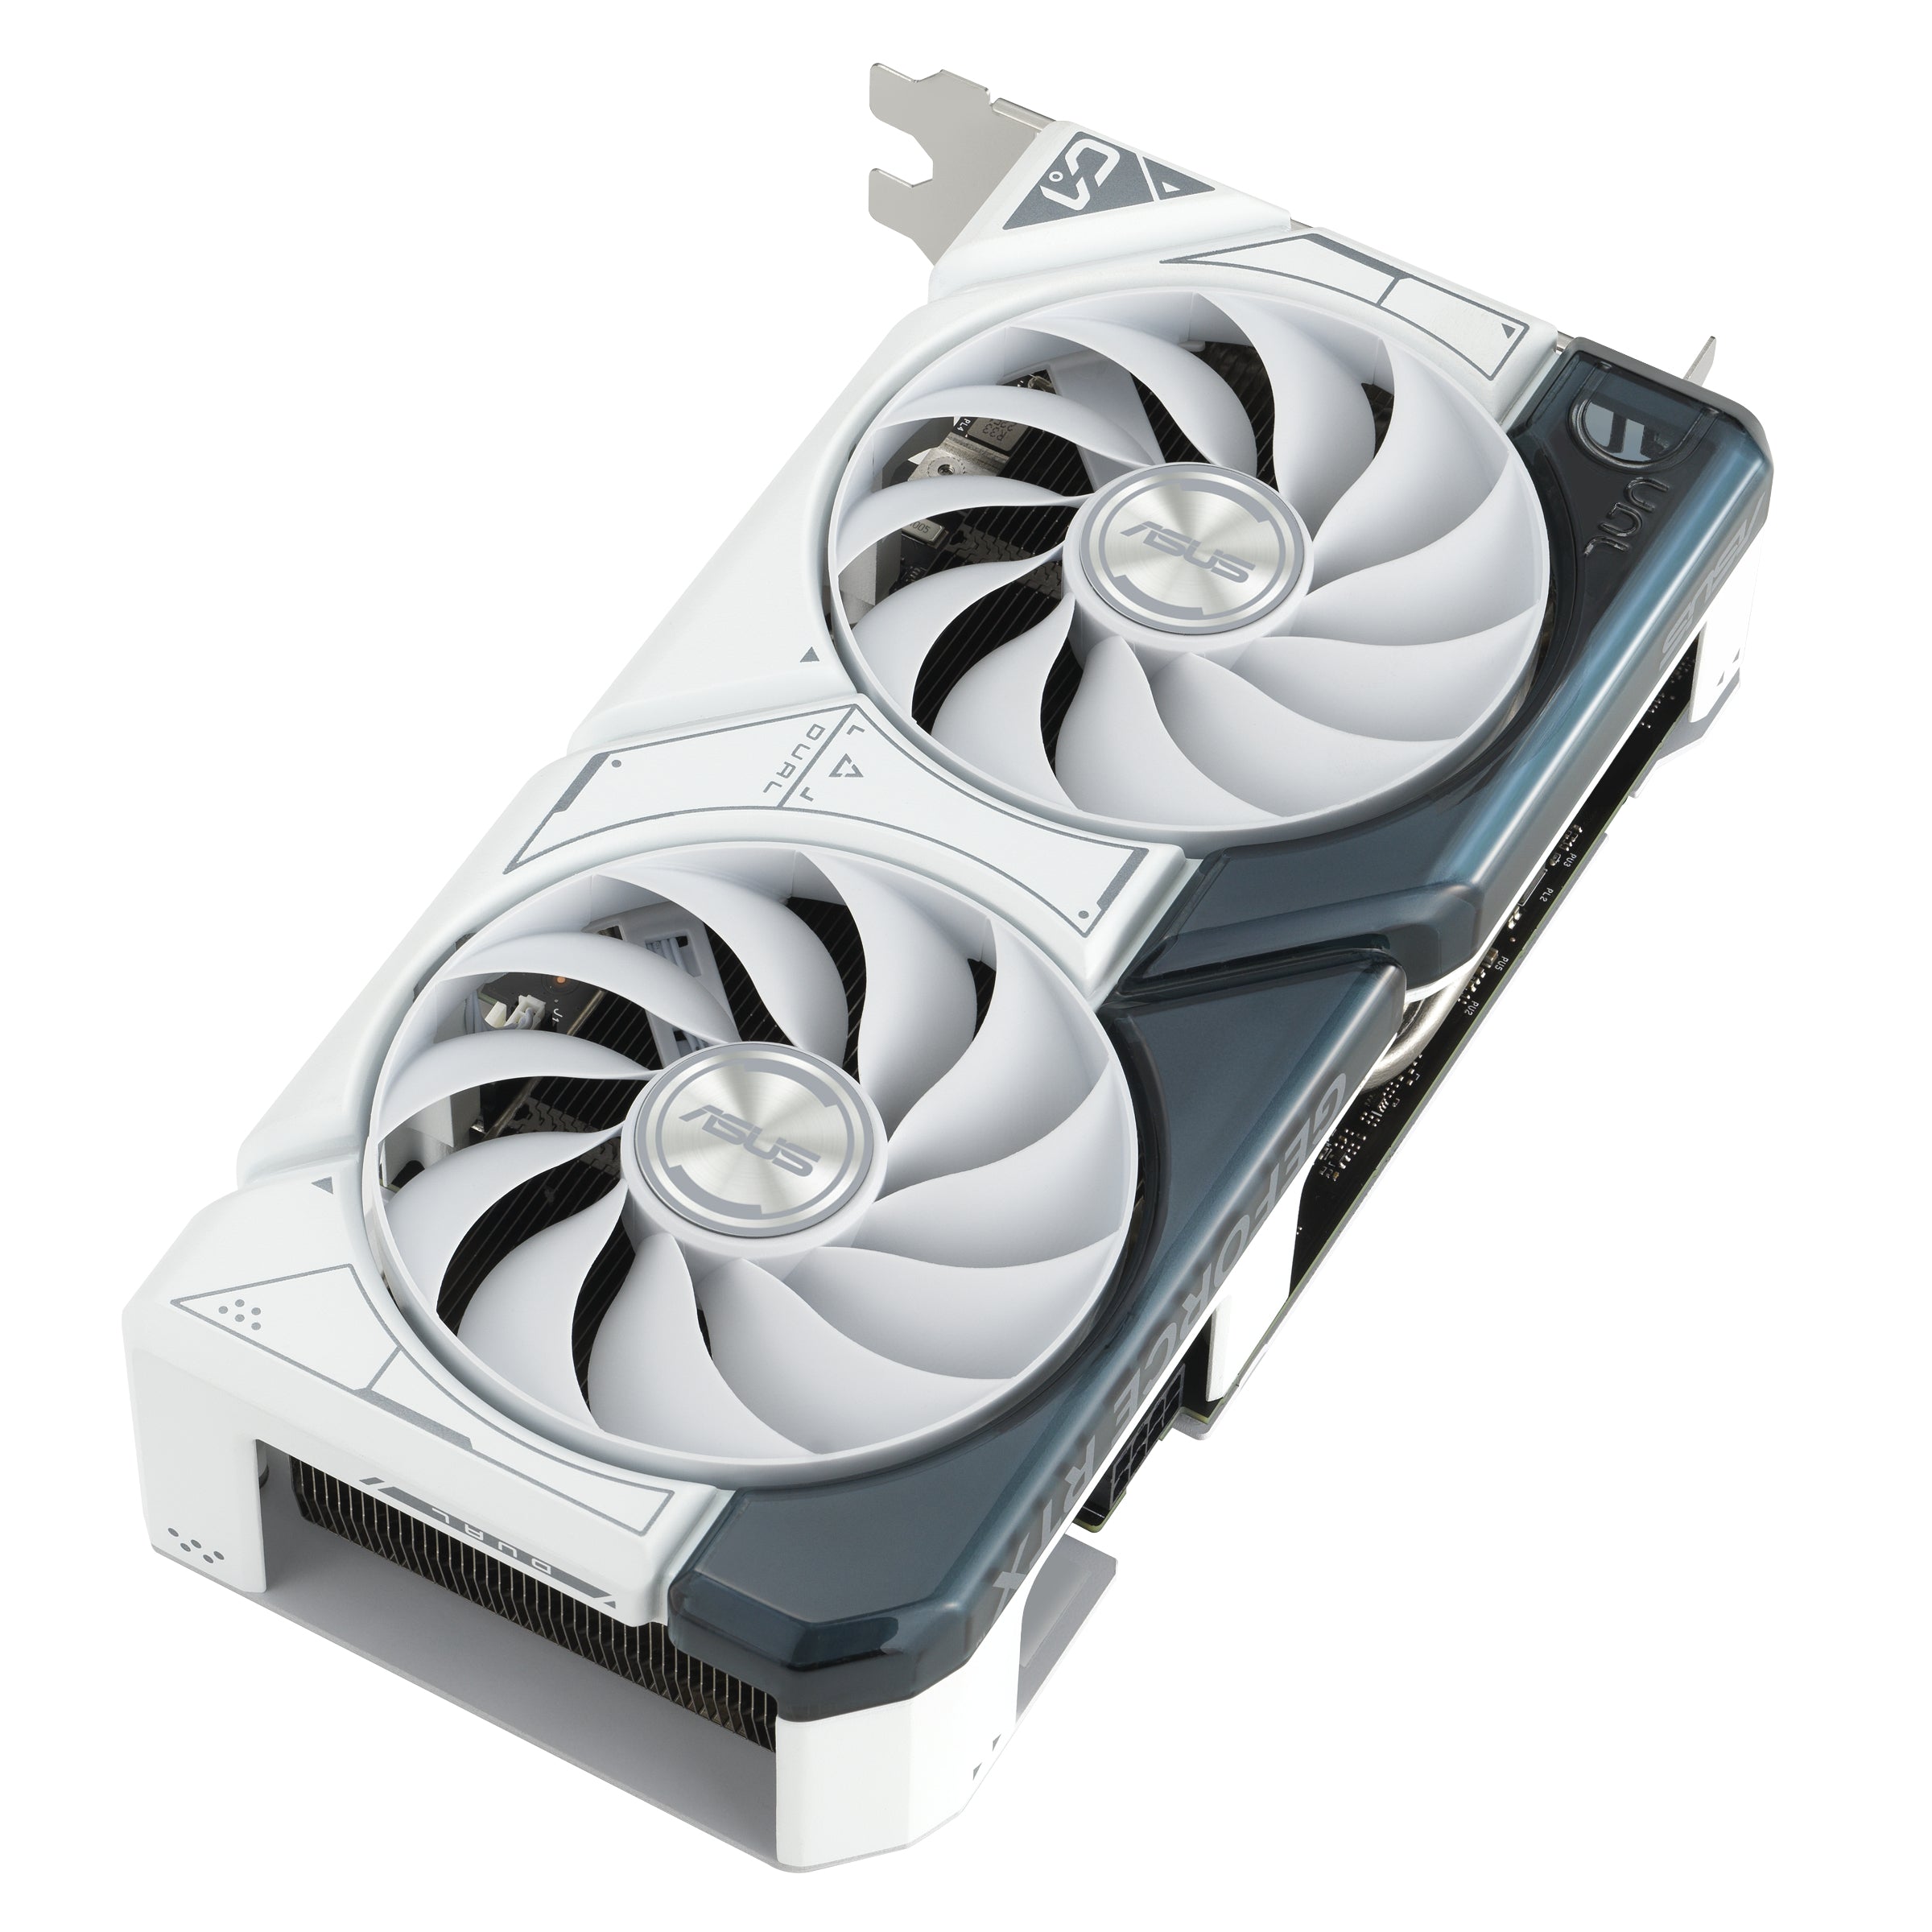 ASUS GeForce RTX 4060 TI 8GB GDDR6 DUAL OC WHITE EDITION